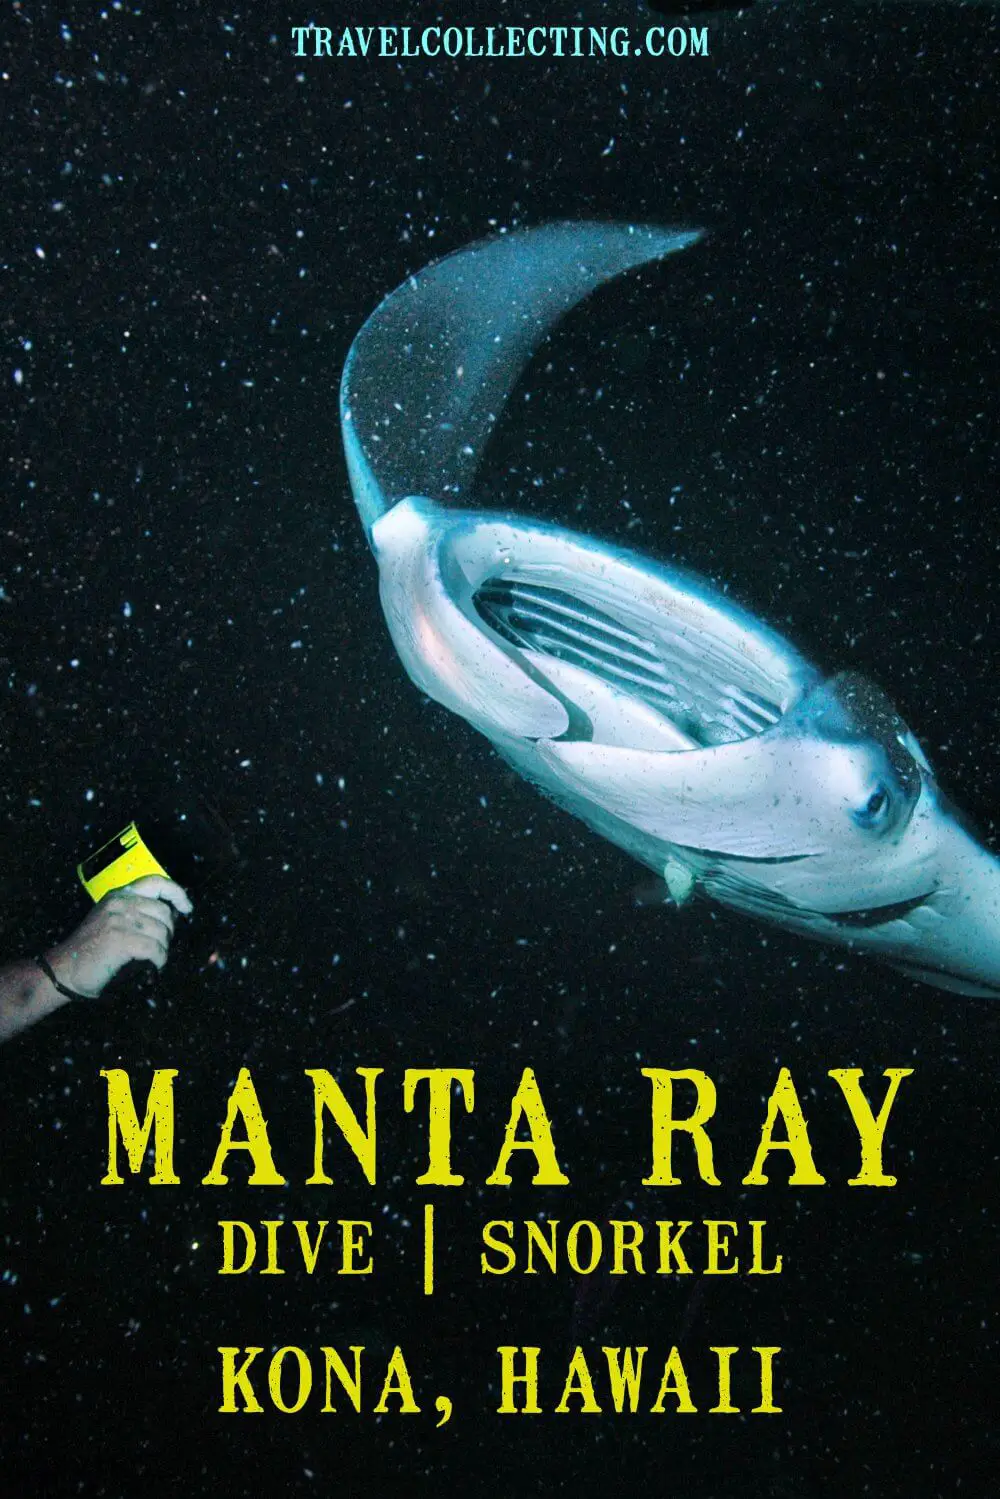 manta rays night diving-pinterest